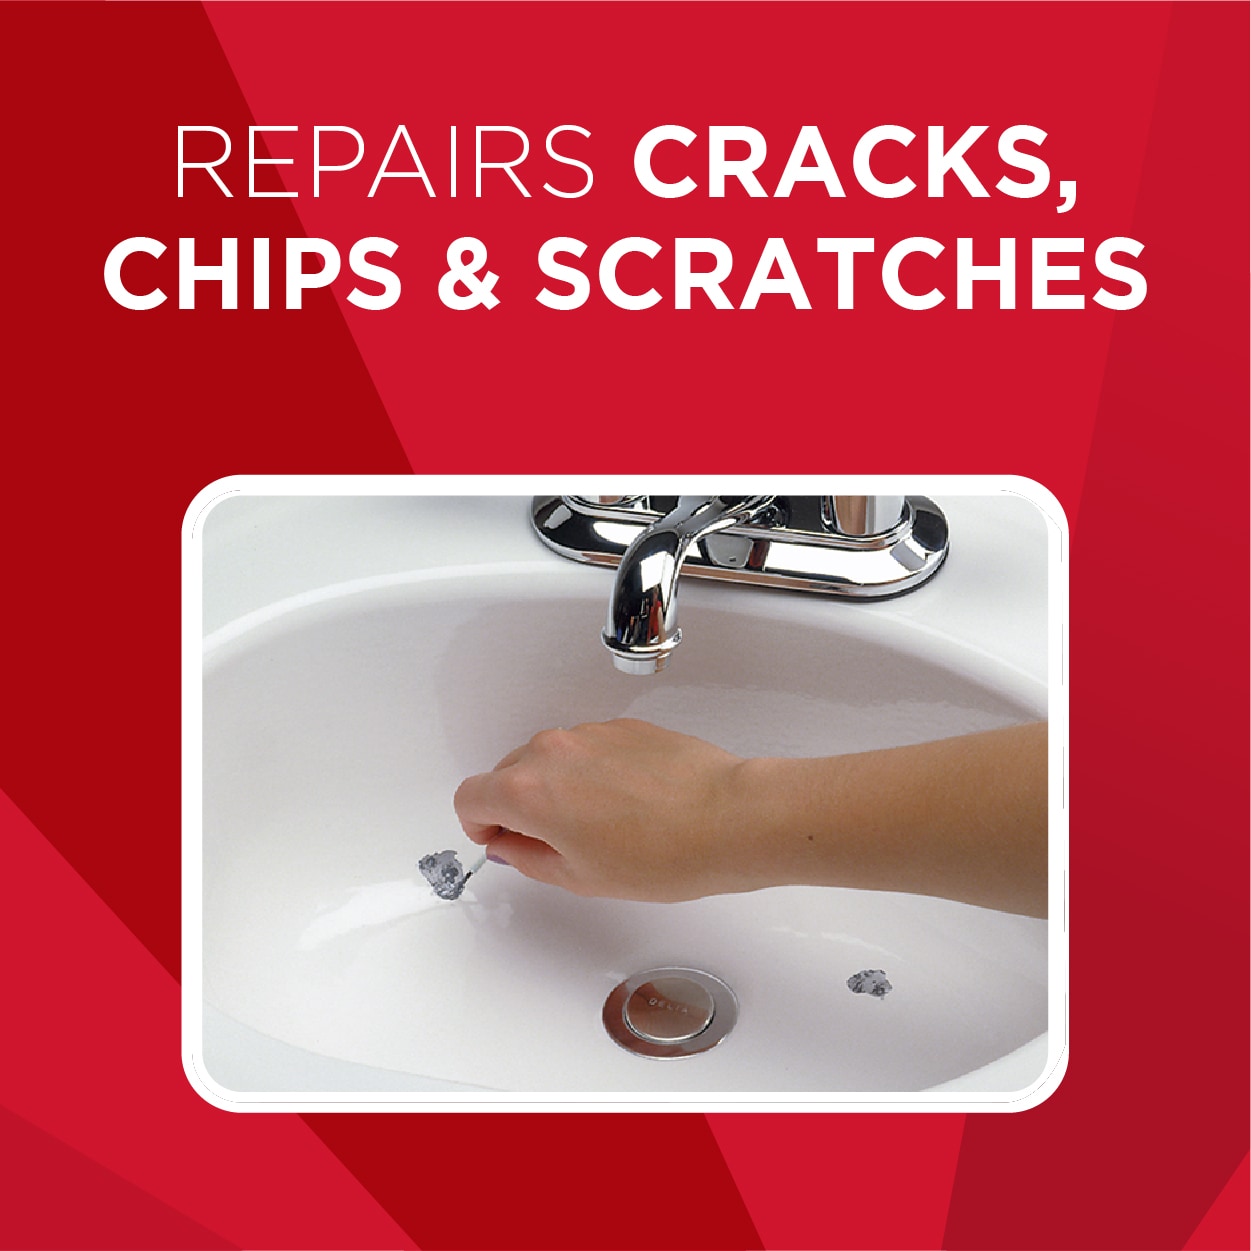 100 ML Ceramic Tile Repair Agent Practical Shower Repair Kit Quick Fix for  Crack